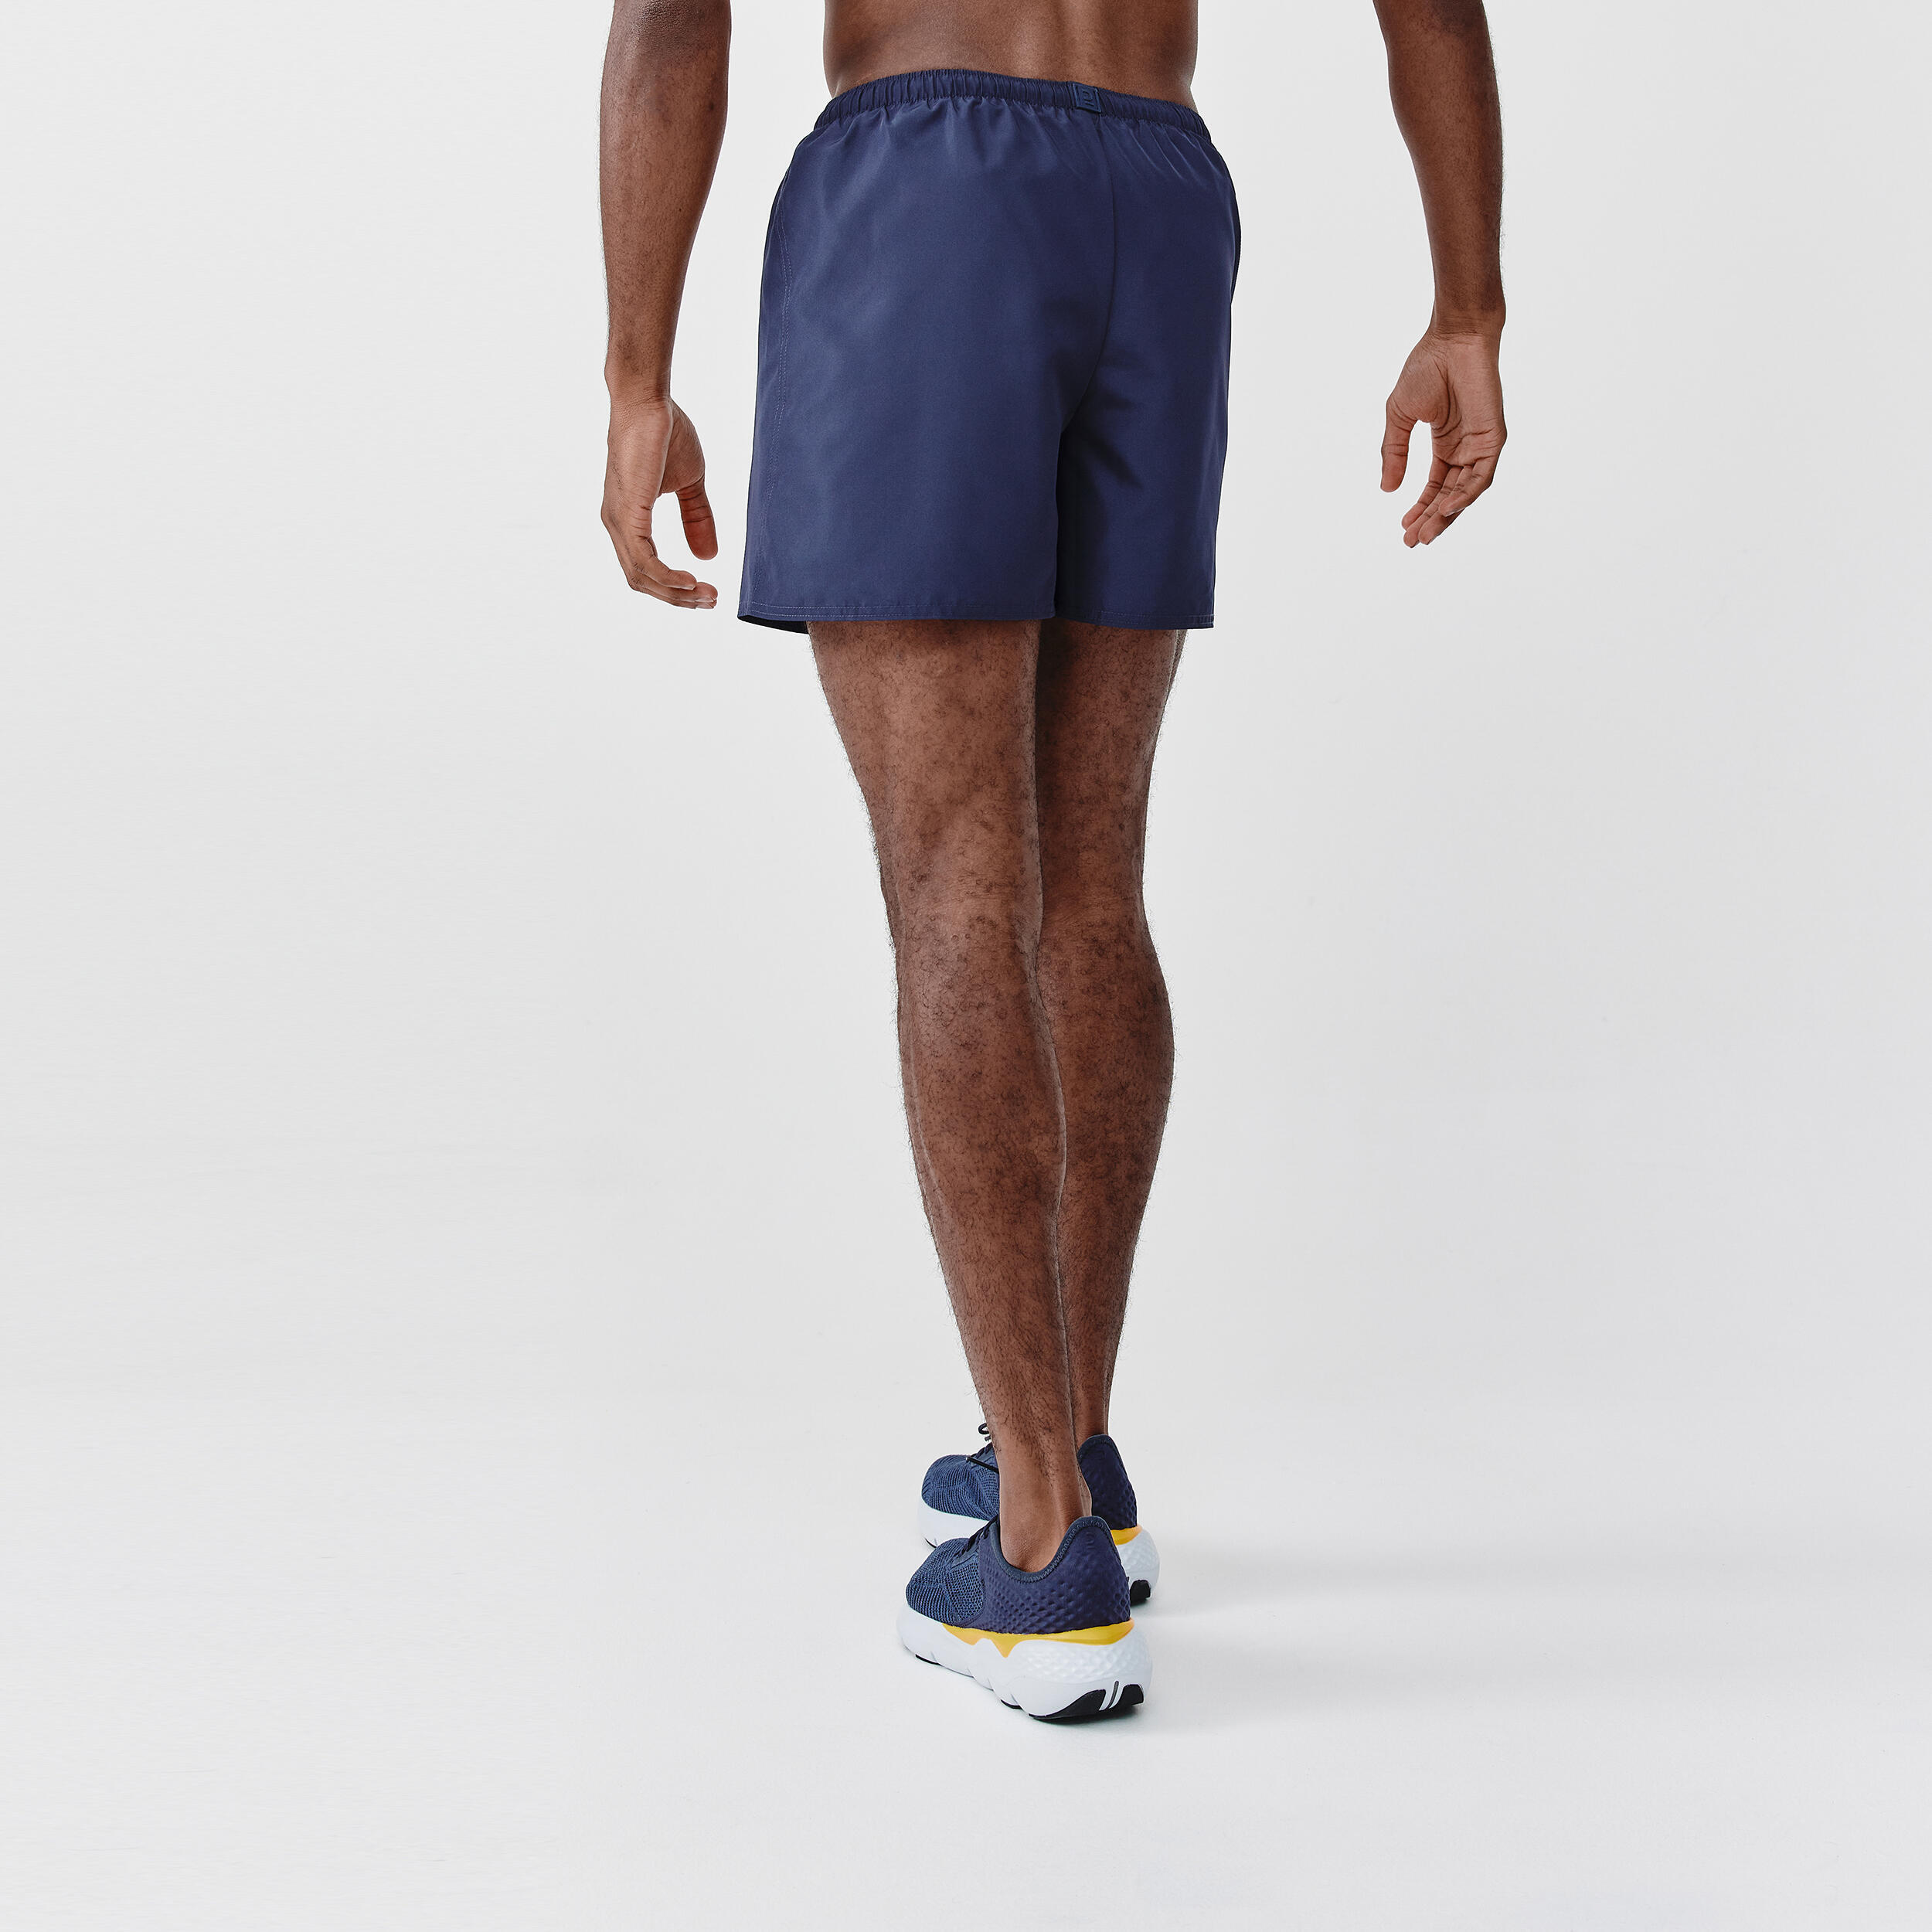 Men's Running Breathable Shorts Dry - dark blue 2/4